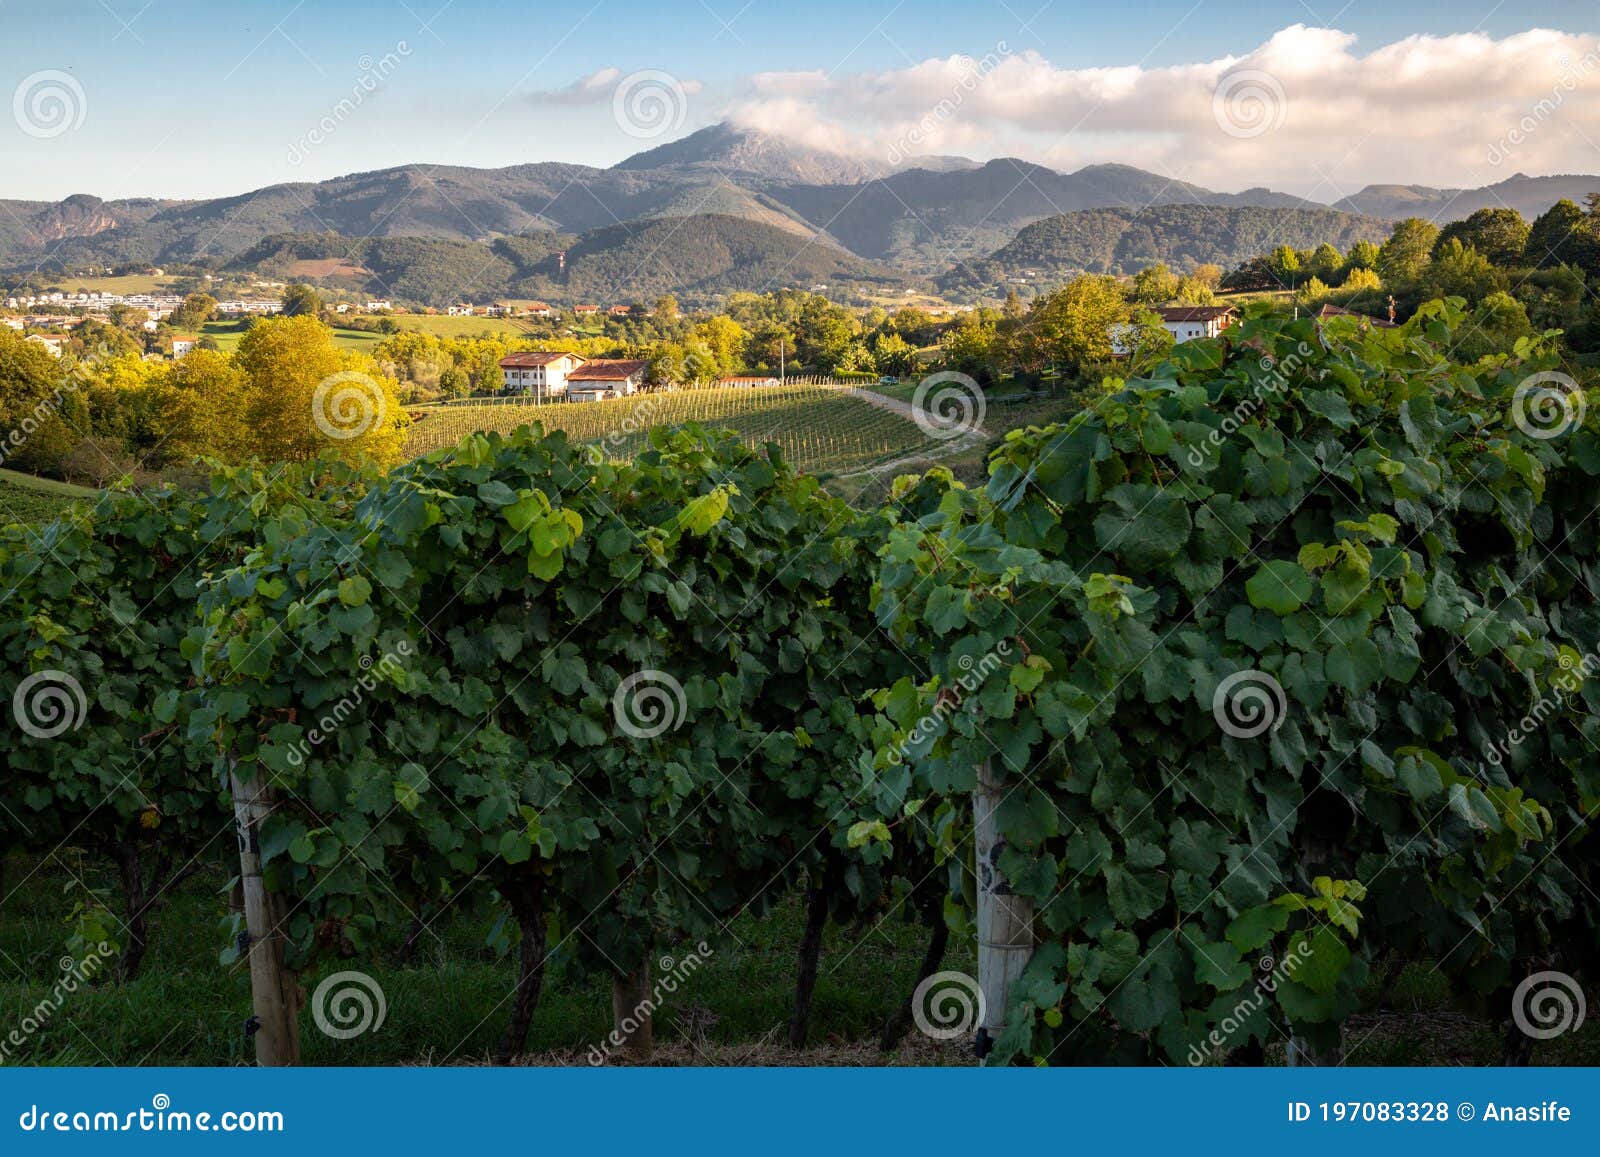 landscape of txakoli vineyard in hondarribia in the basque country